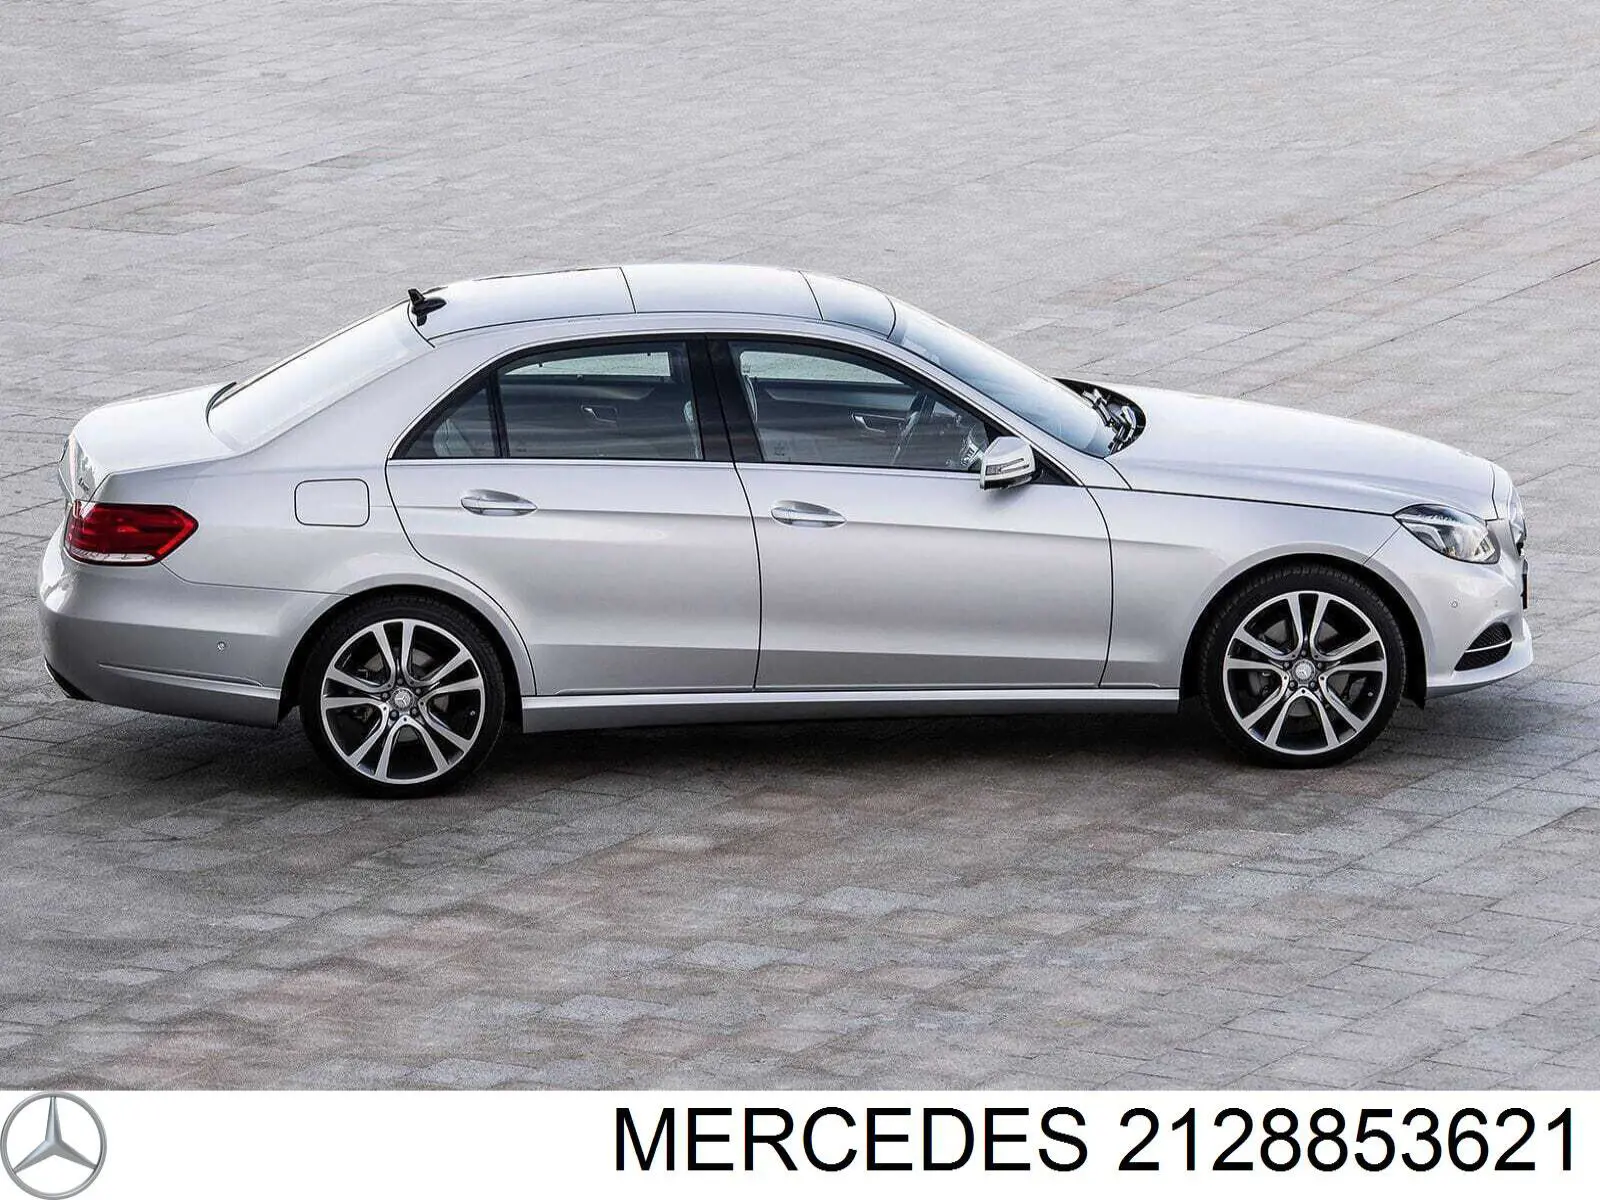 2128853621 Mercedes